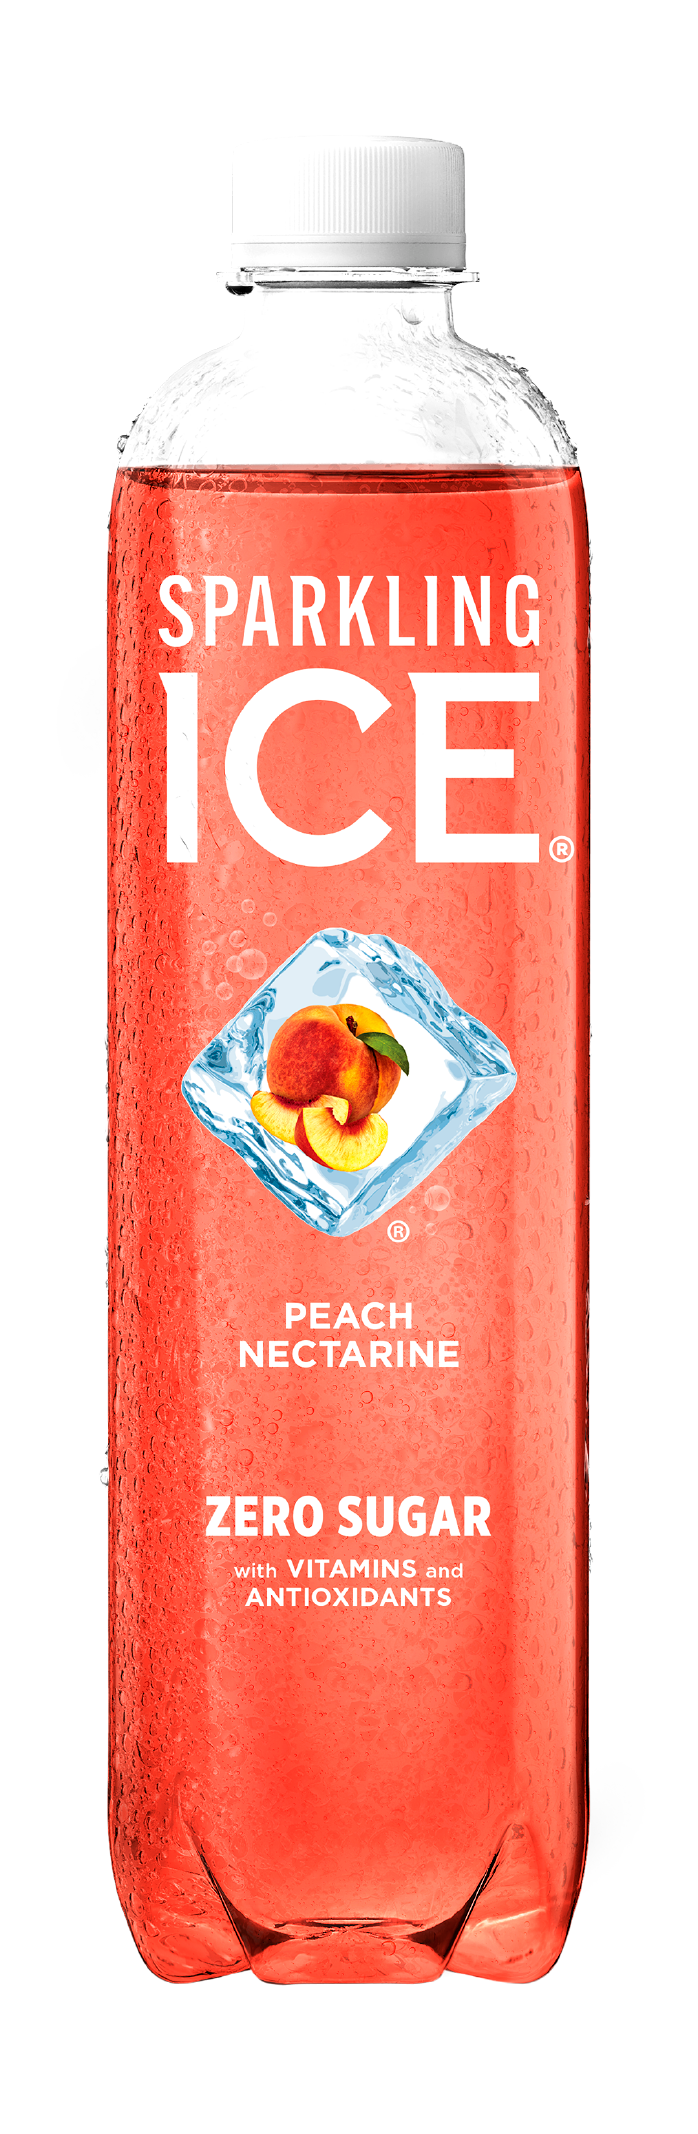 Peach Nectarine